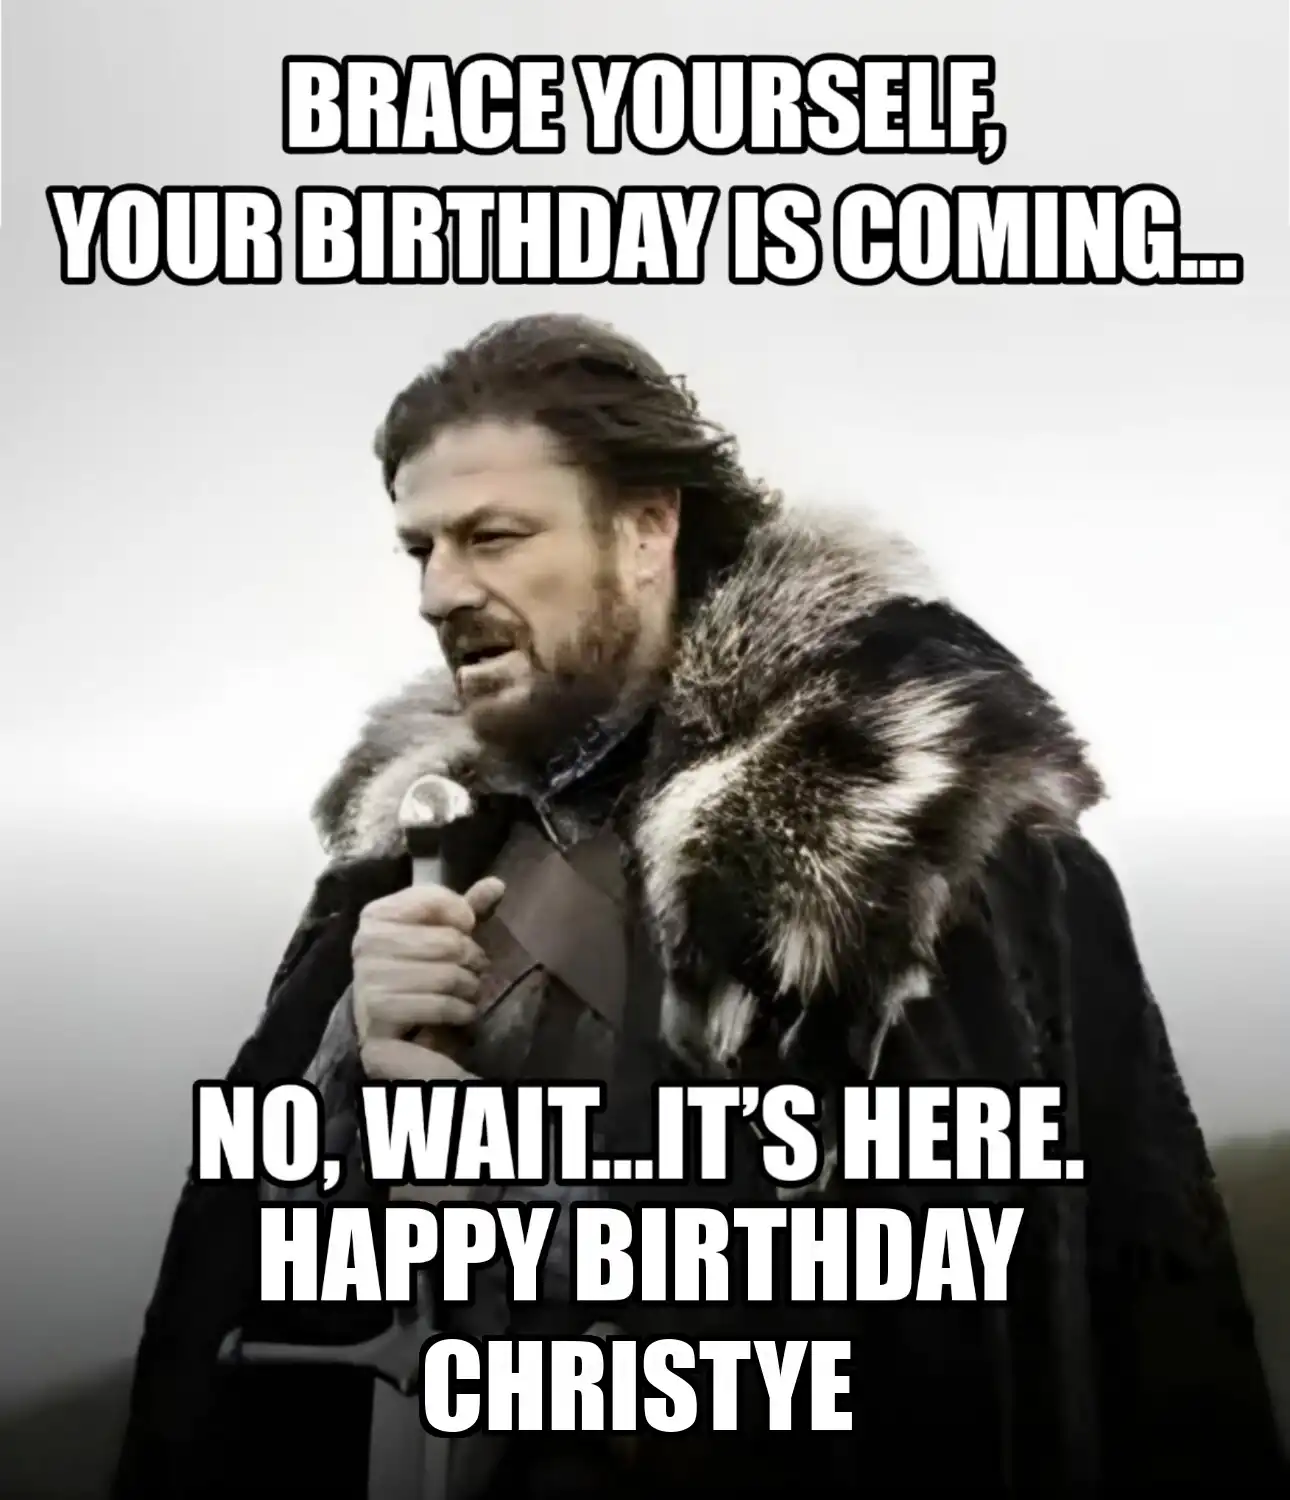 Happy Birthday Christye Brace Yourself Your Birthday Is Coming Meme